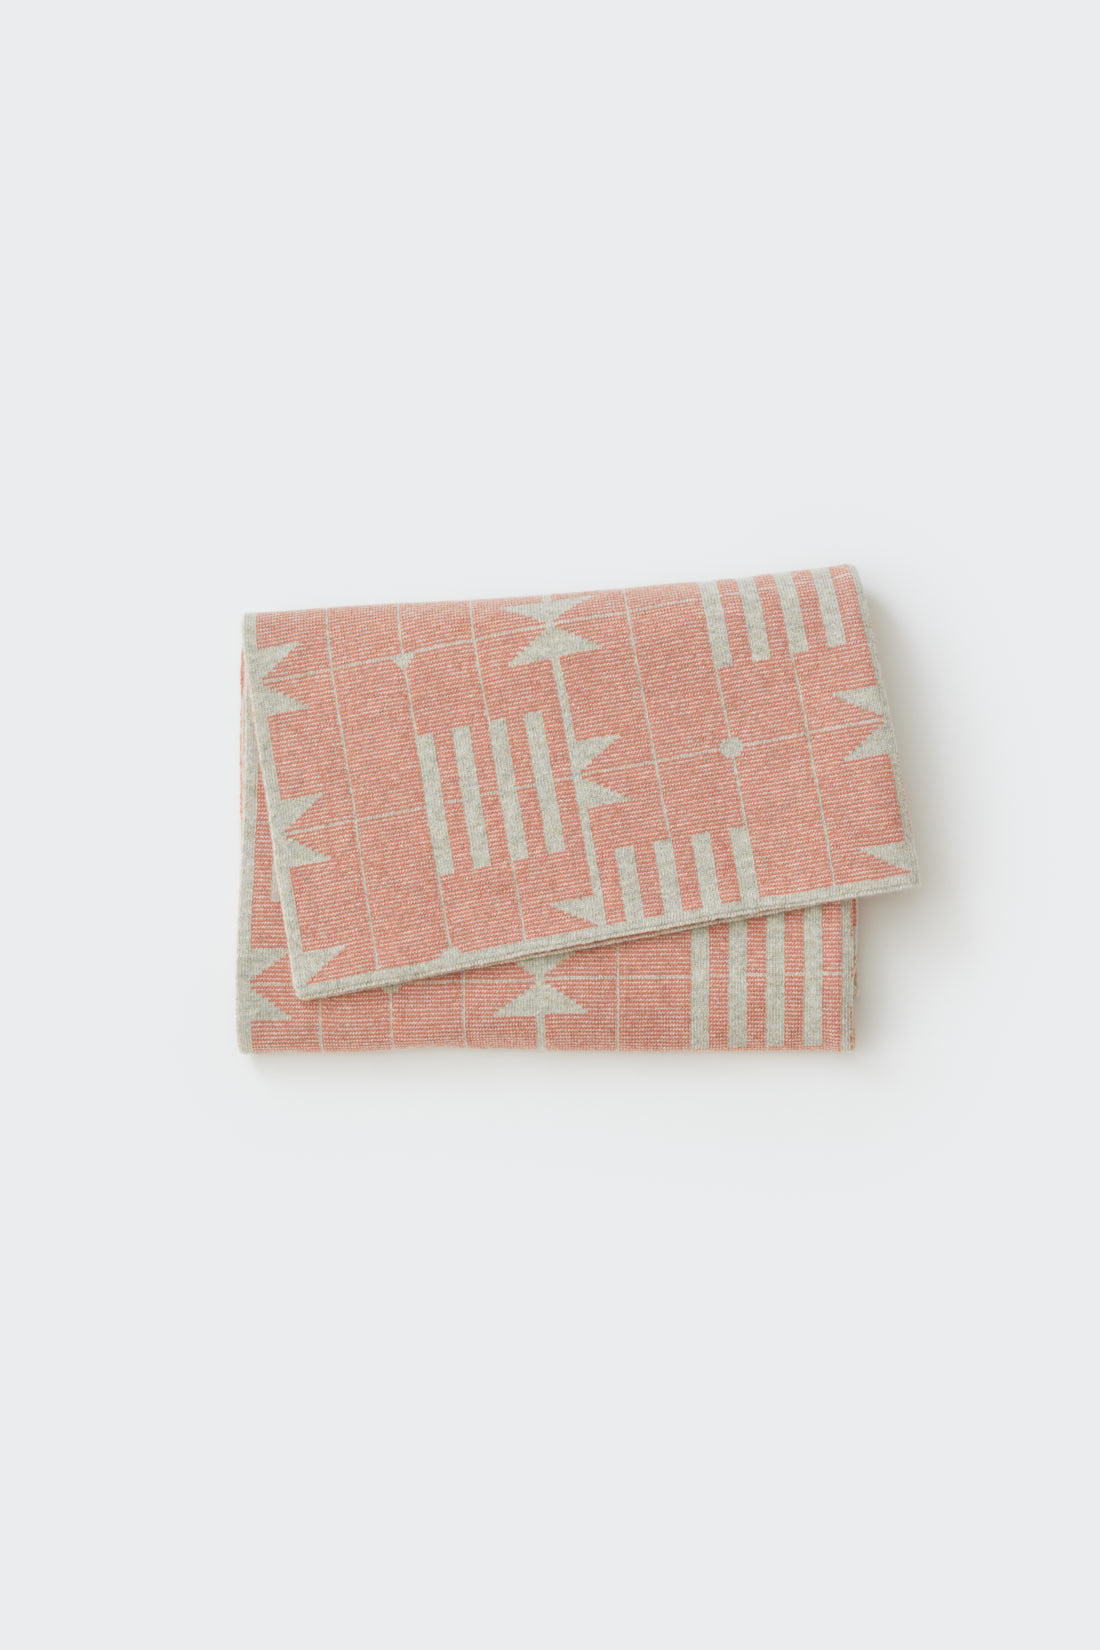 Mini Blanket "Dovetail" - Birch + Rosehip